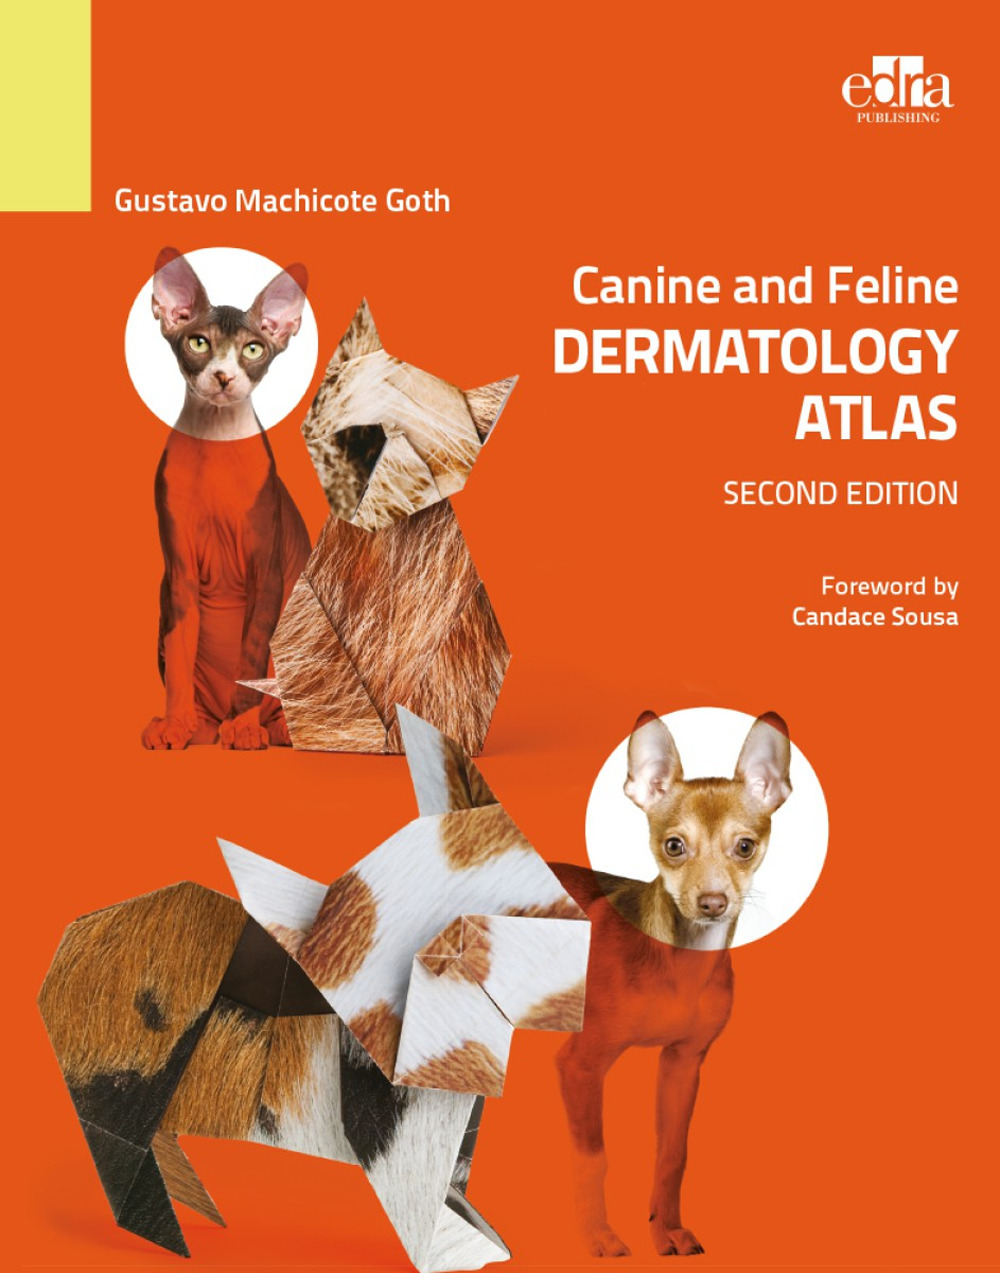 Canine and feline dermatology Atlas